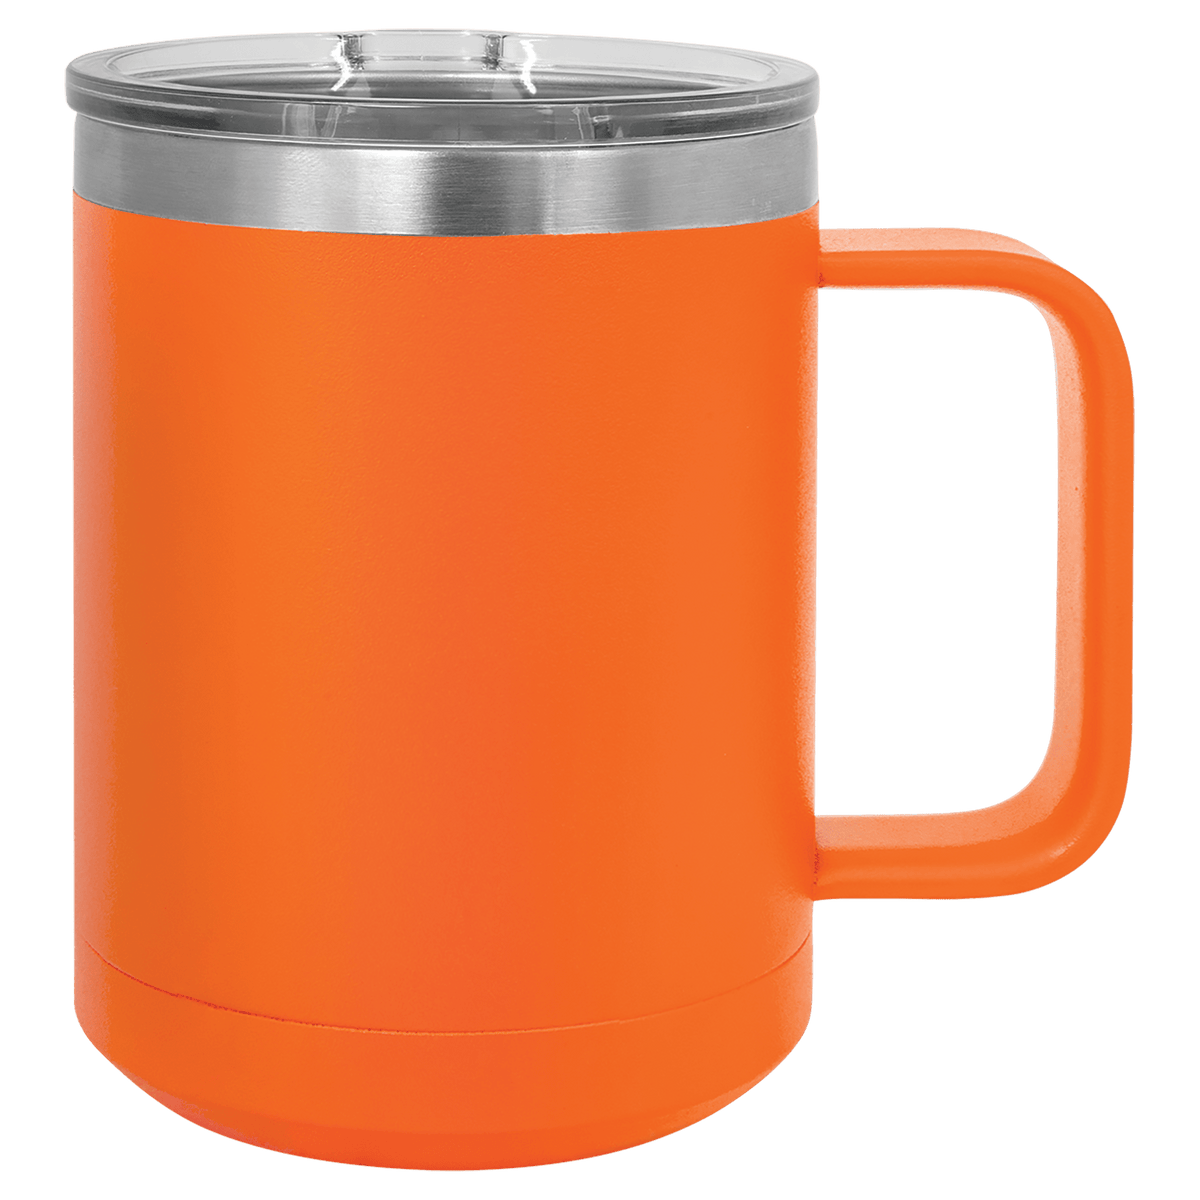 15 oz. Polar Camel Vacuum Insulated Mug with Slider Lid Orange